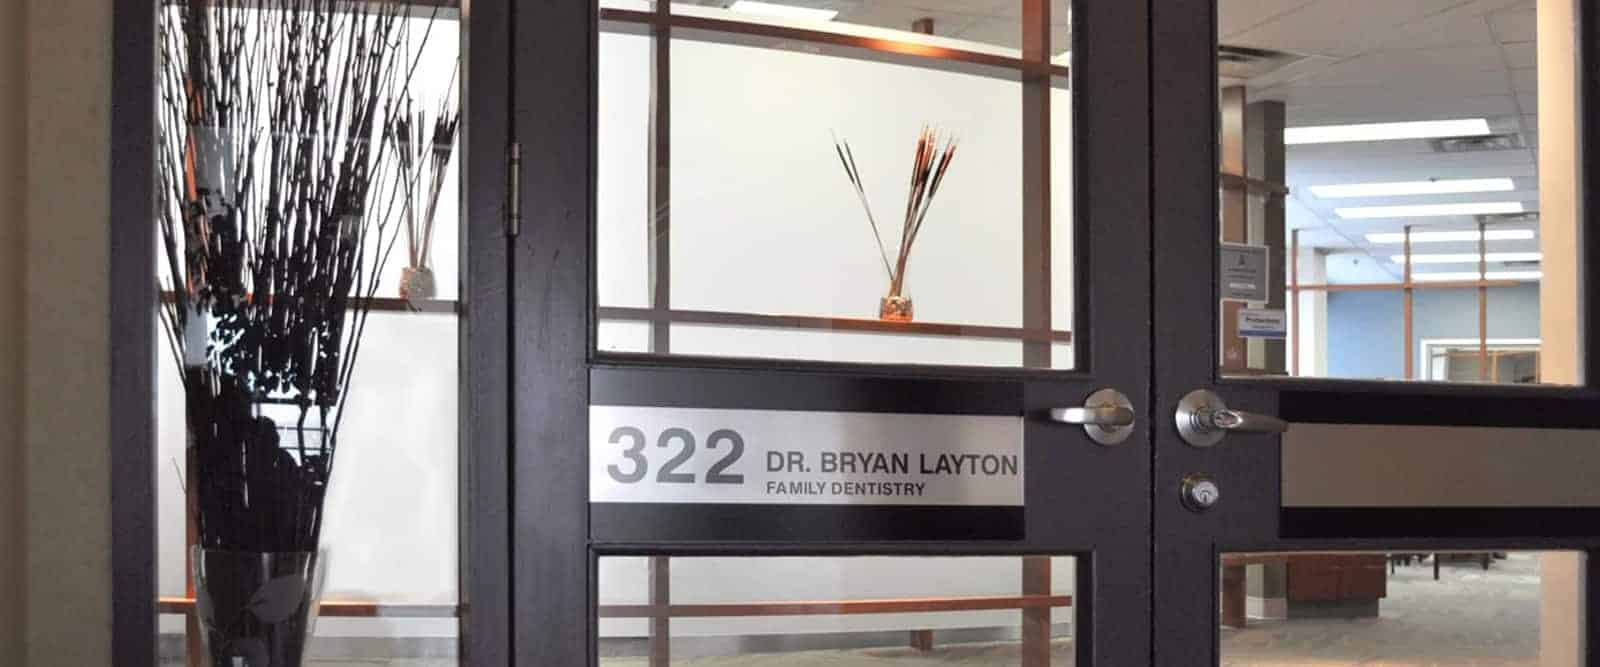 dr. bryan layton family dentistry